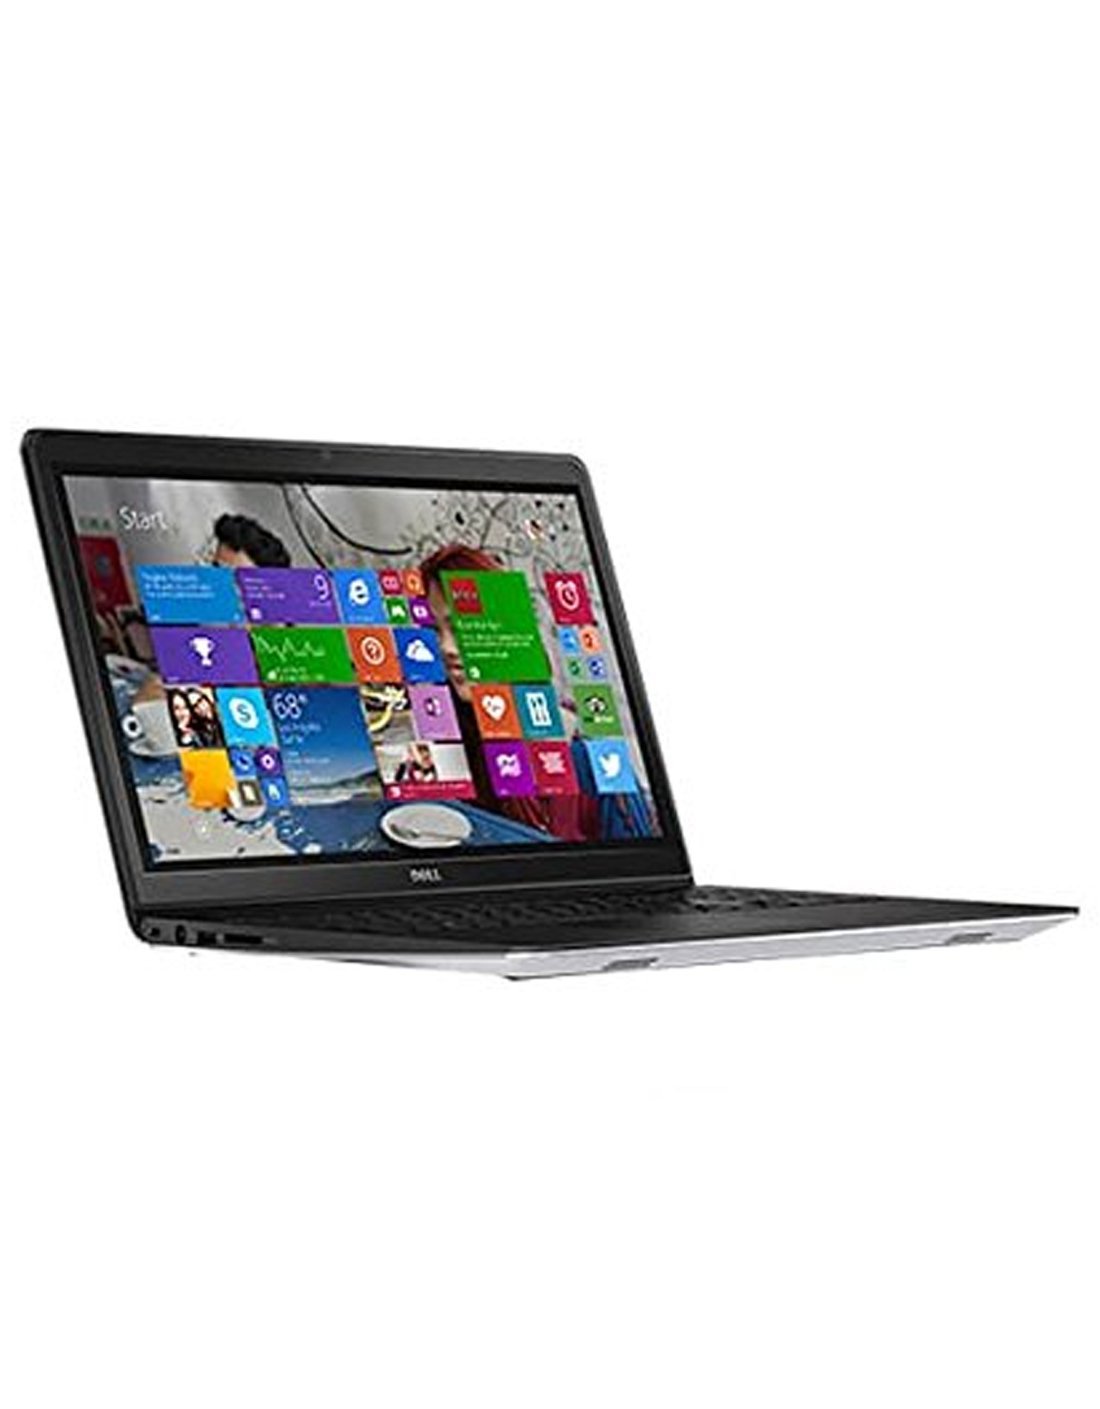 Dell Inspiron 15 i5548-1670SLV Signature Edition Touchscreen Laptop